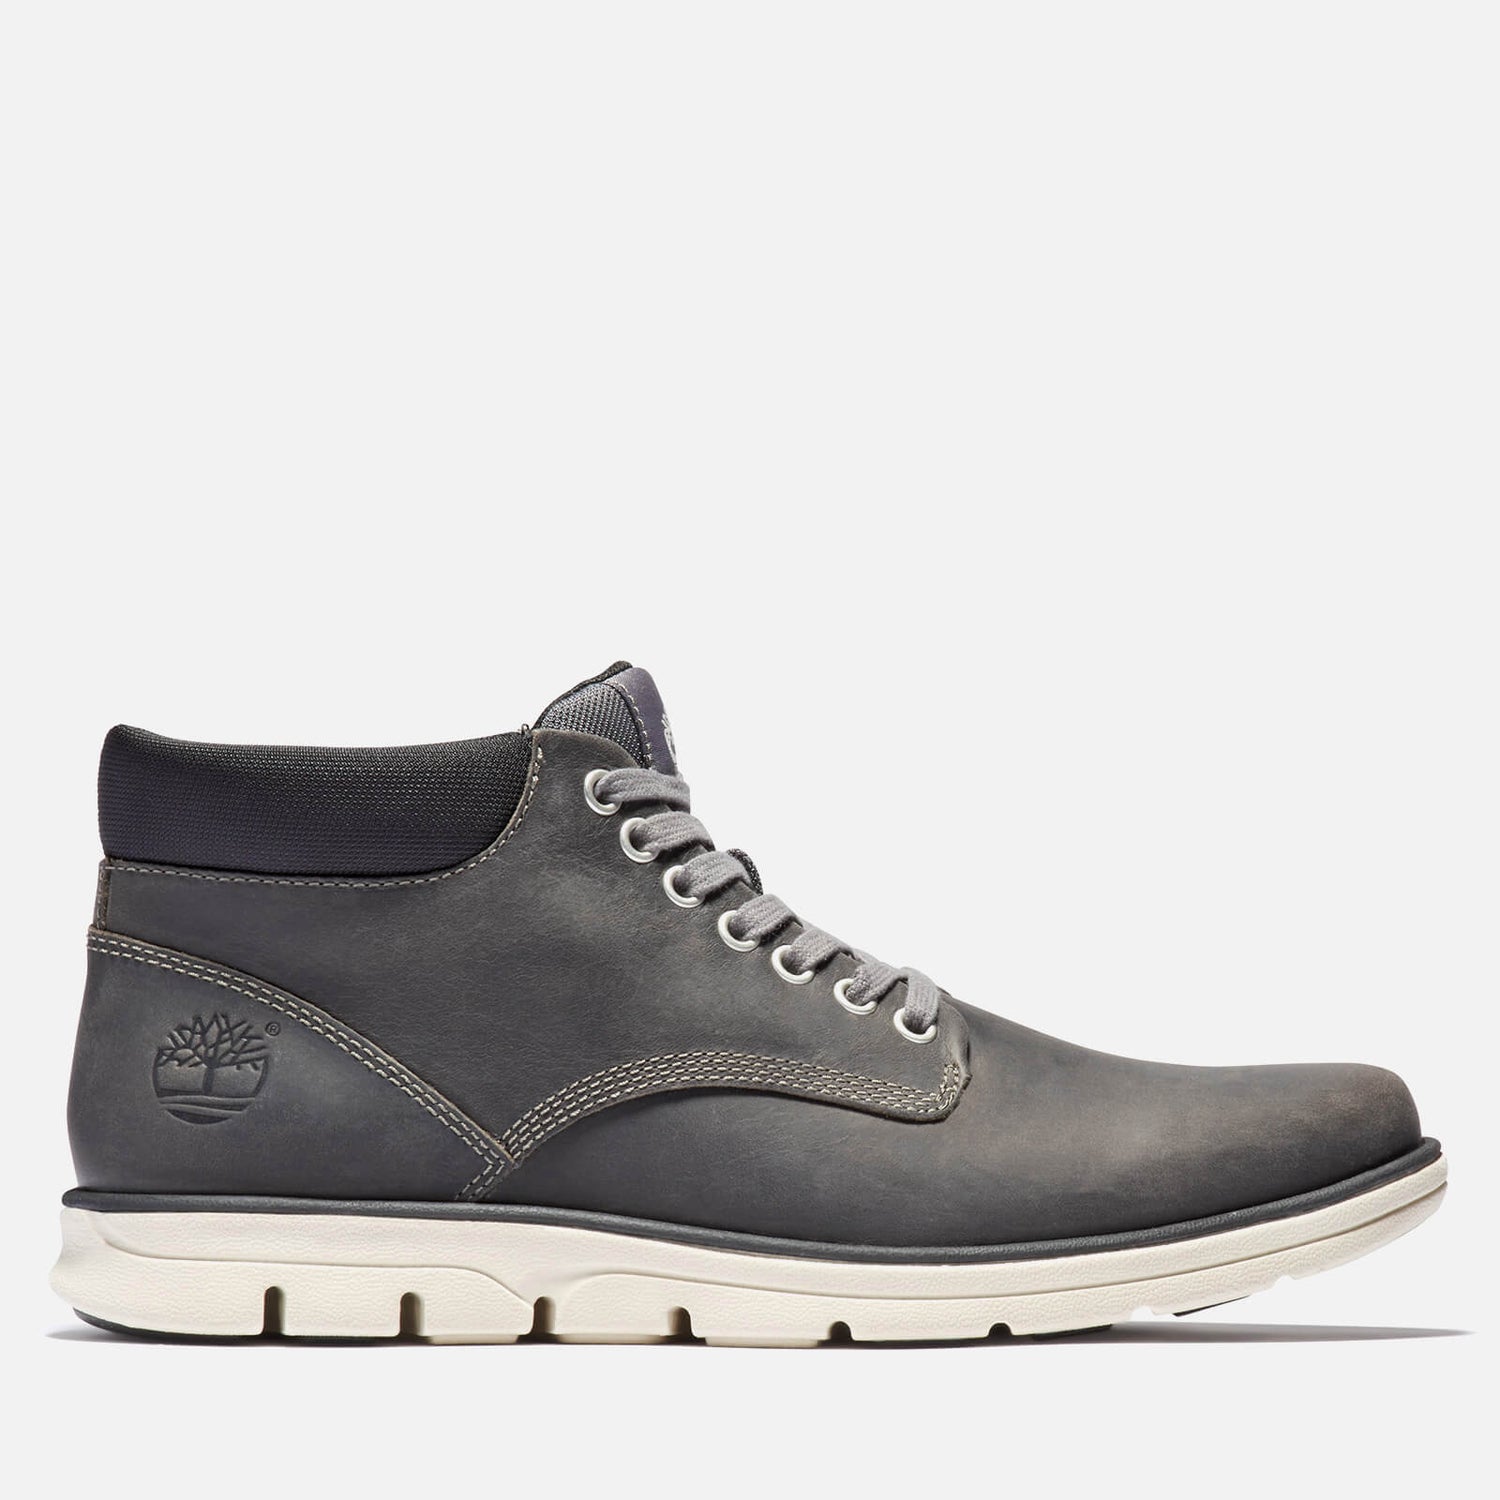 Timberland Men's Bradstreet Leather Chukka Boots - Dark Grey